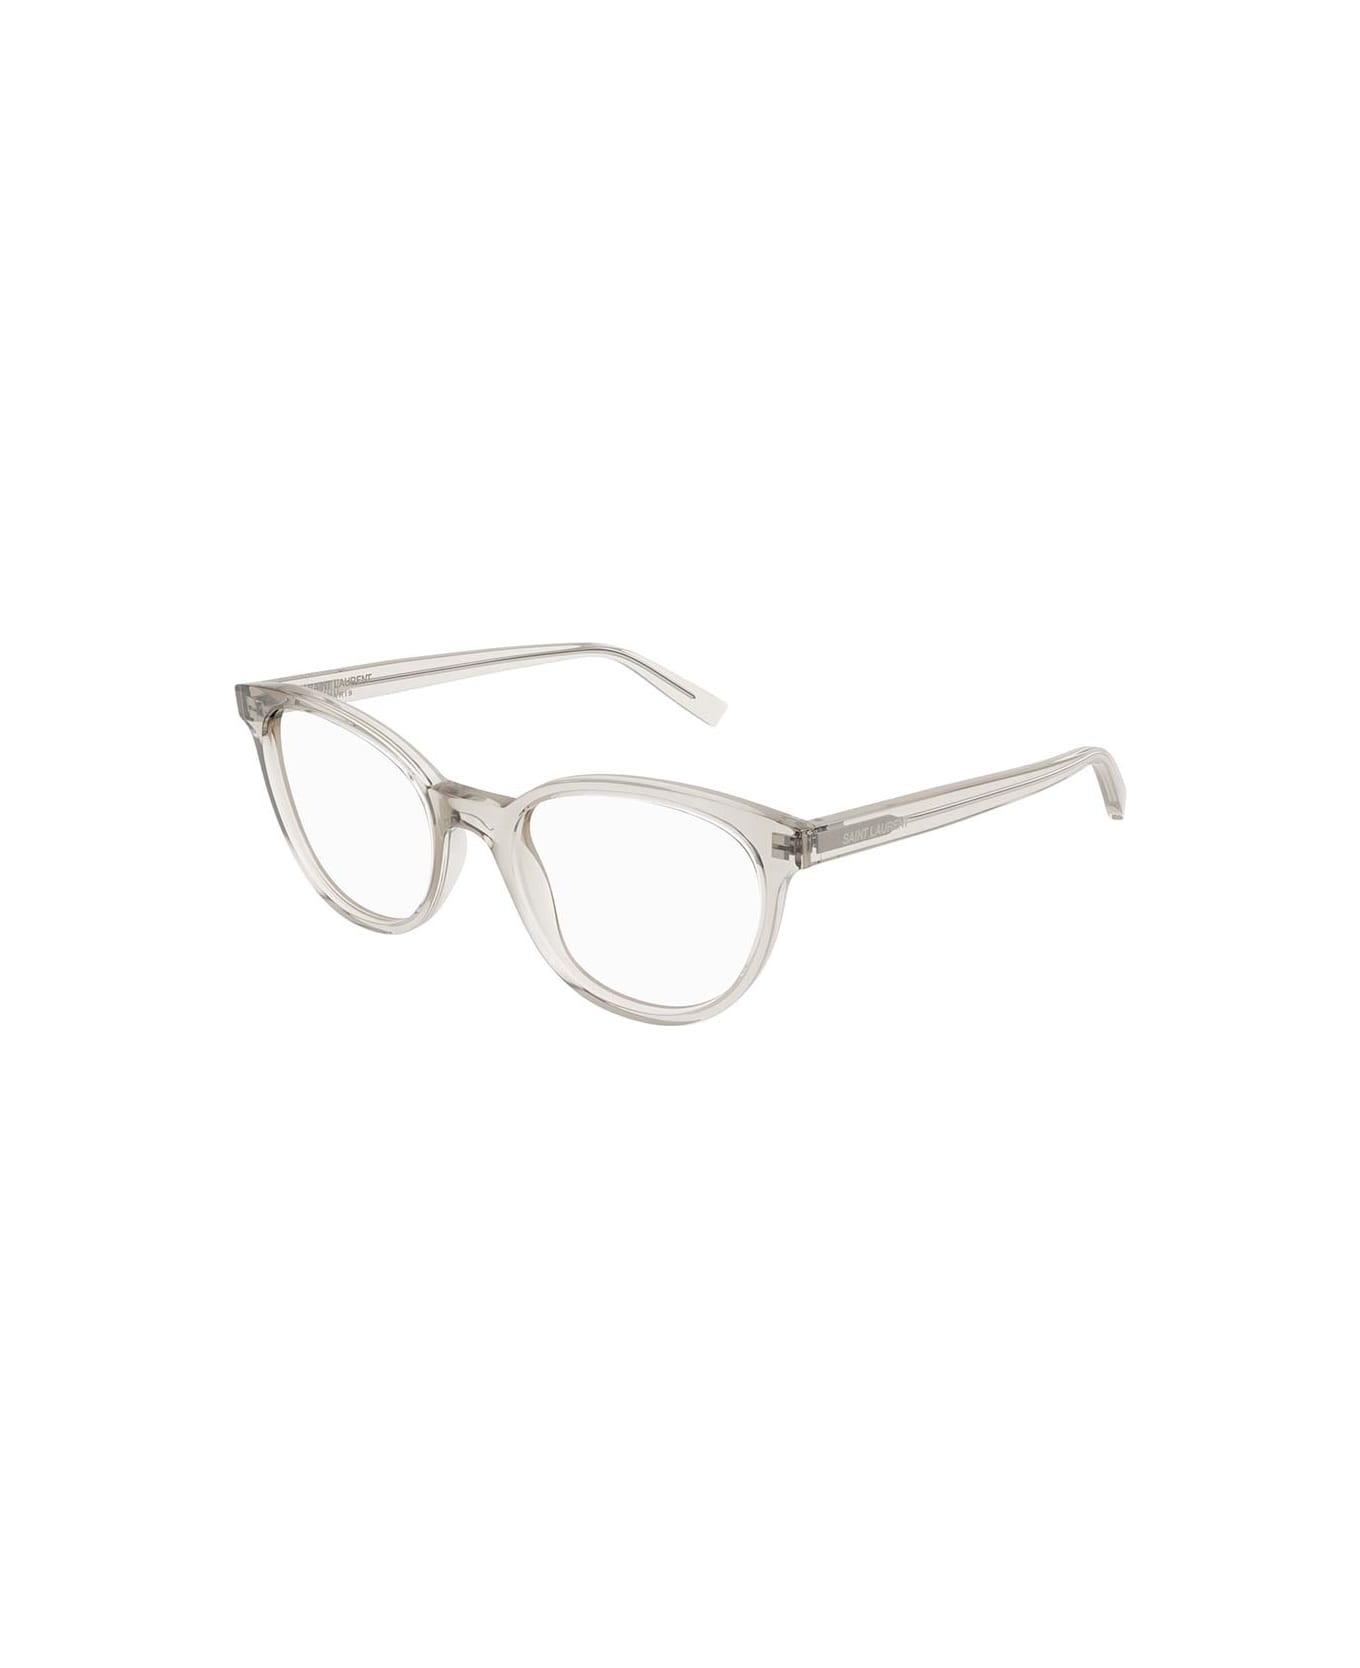 Saint Laurent Eyewear Glasses - Beige